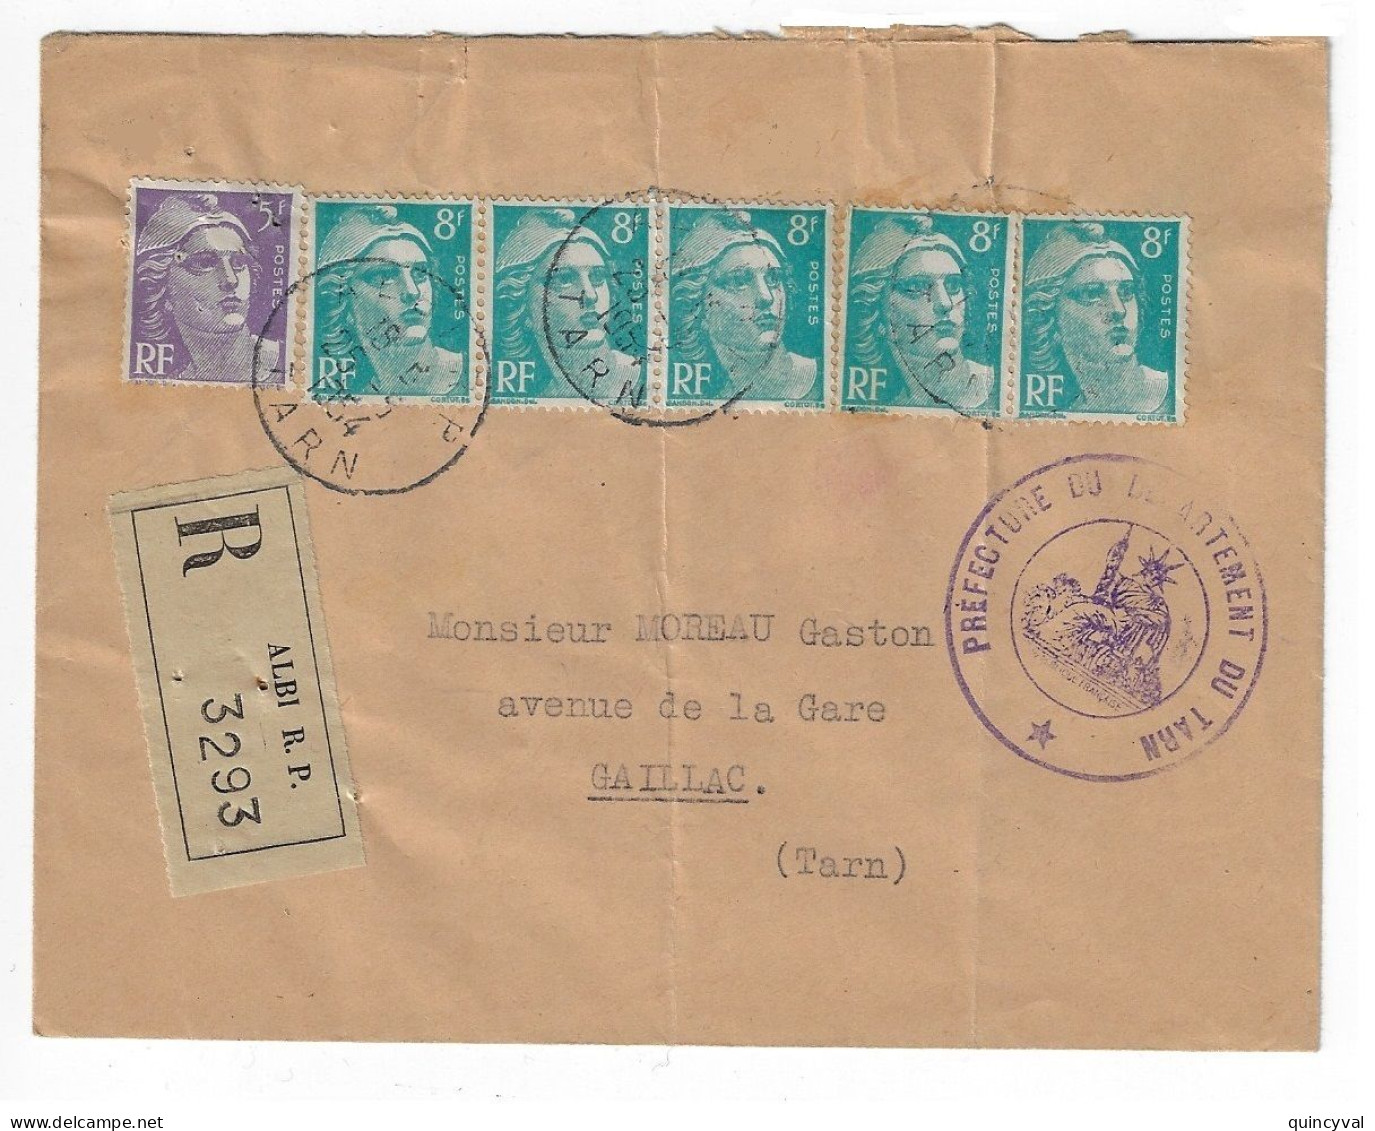 ALBI R. P. Tarn Lettre Recommandée Préfecture Gandon 8 F Emeraude 5 F Violet Yv 883 810 Ob 25 5 1954 - Covers & Documents